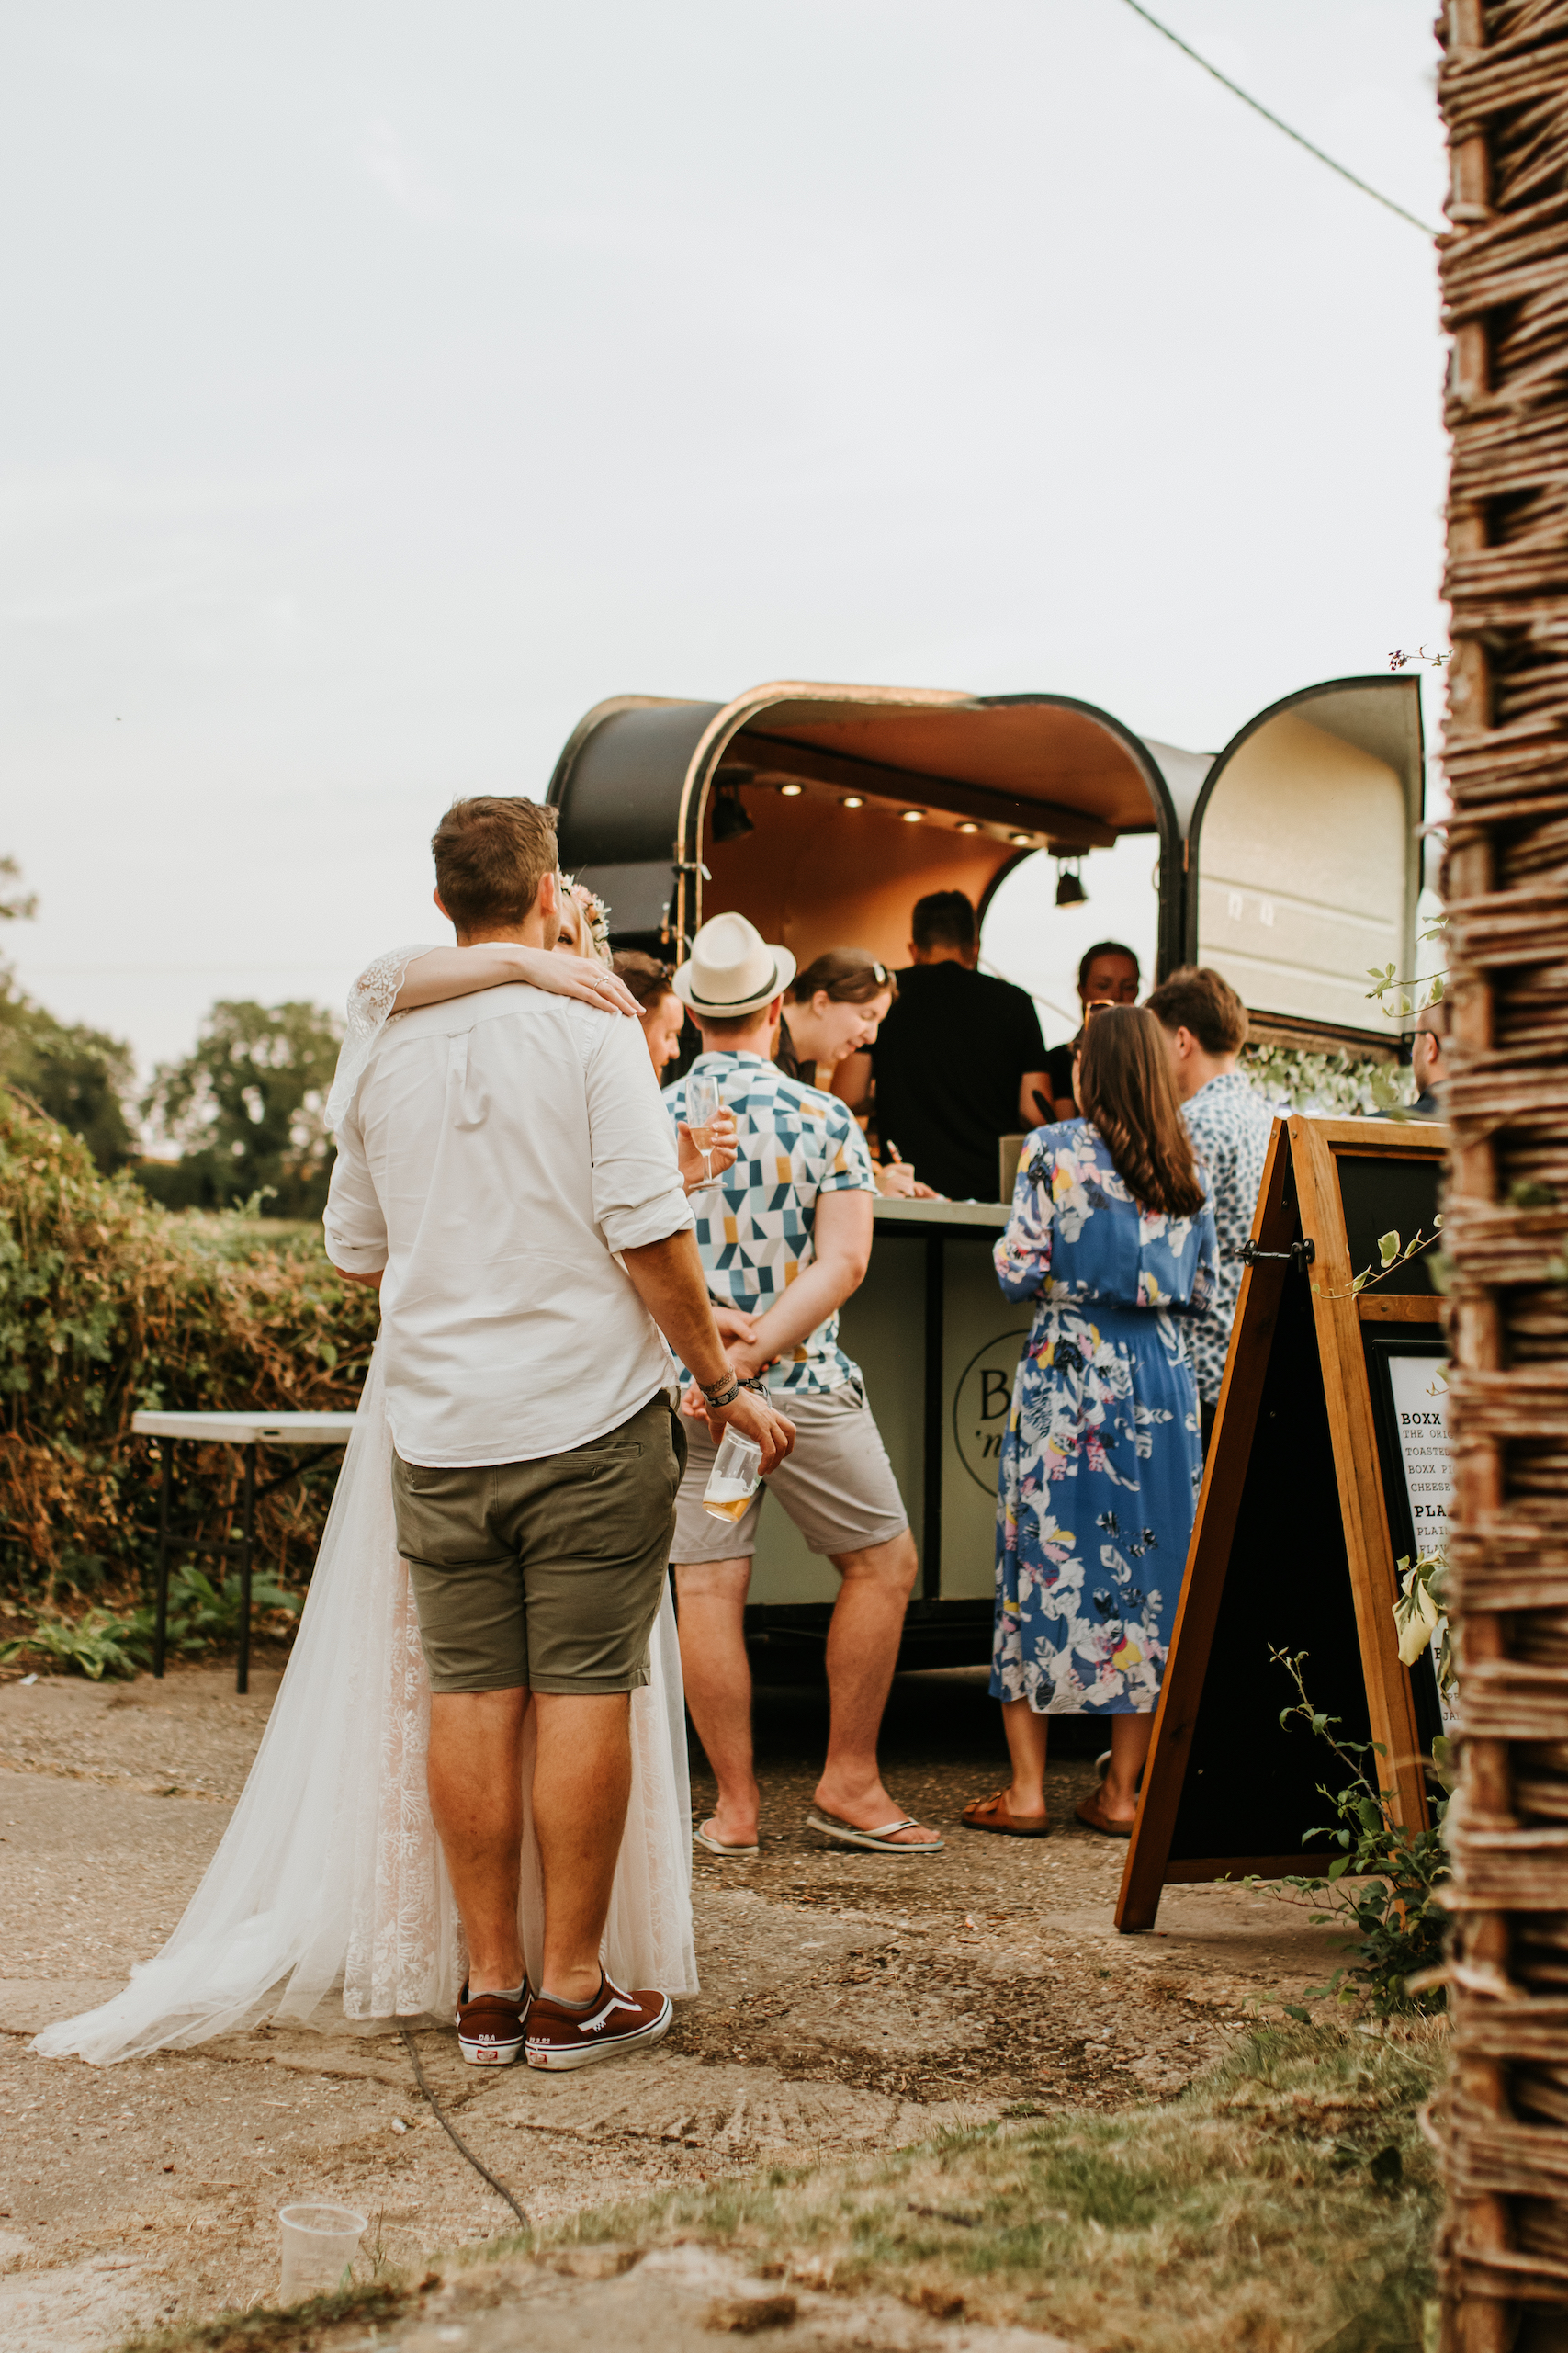 Bride and Groom by Vegan Food Truck | Wedding Photographer in Buckinghamshire